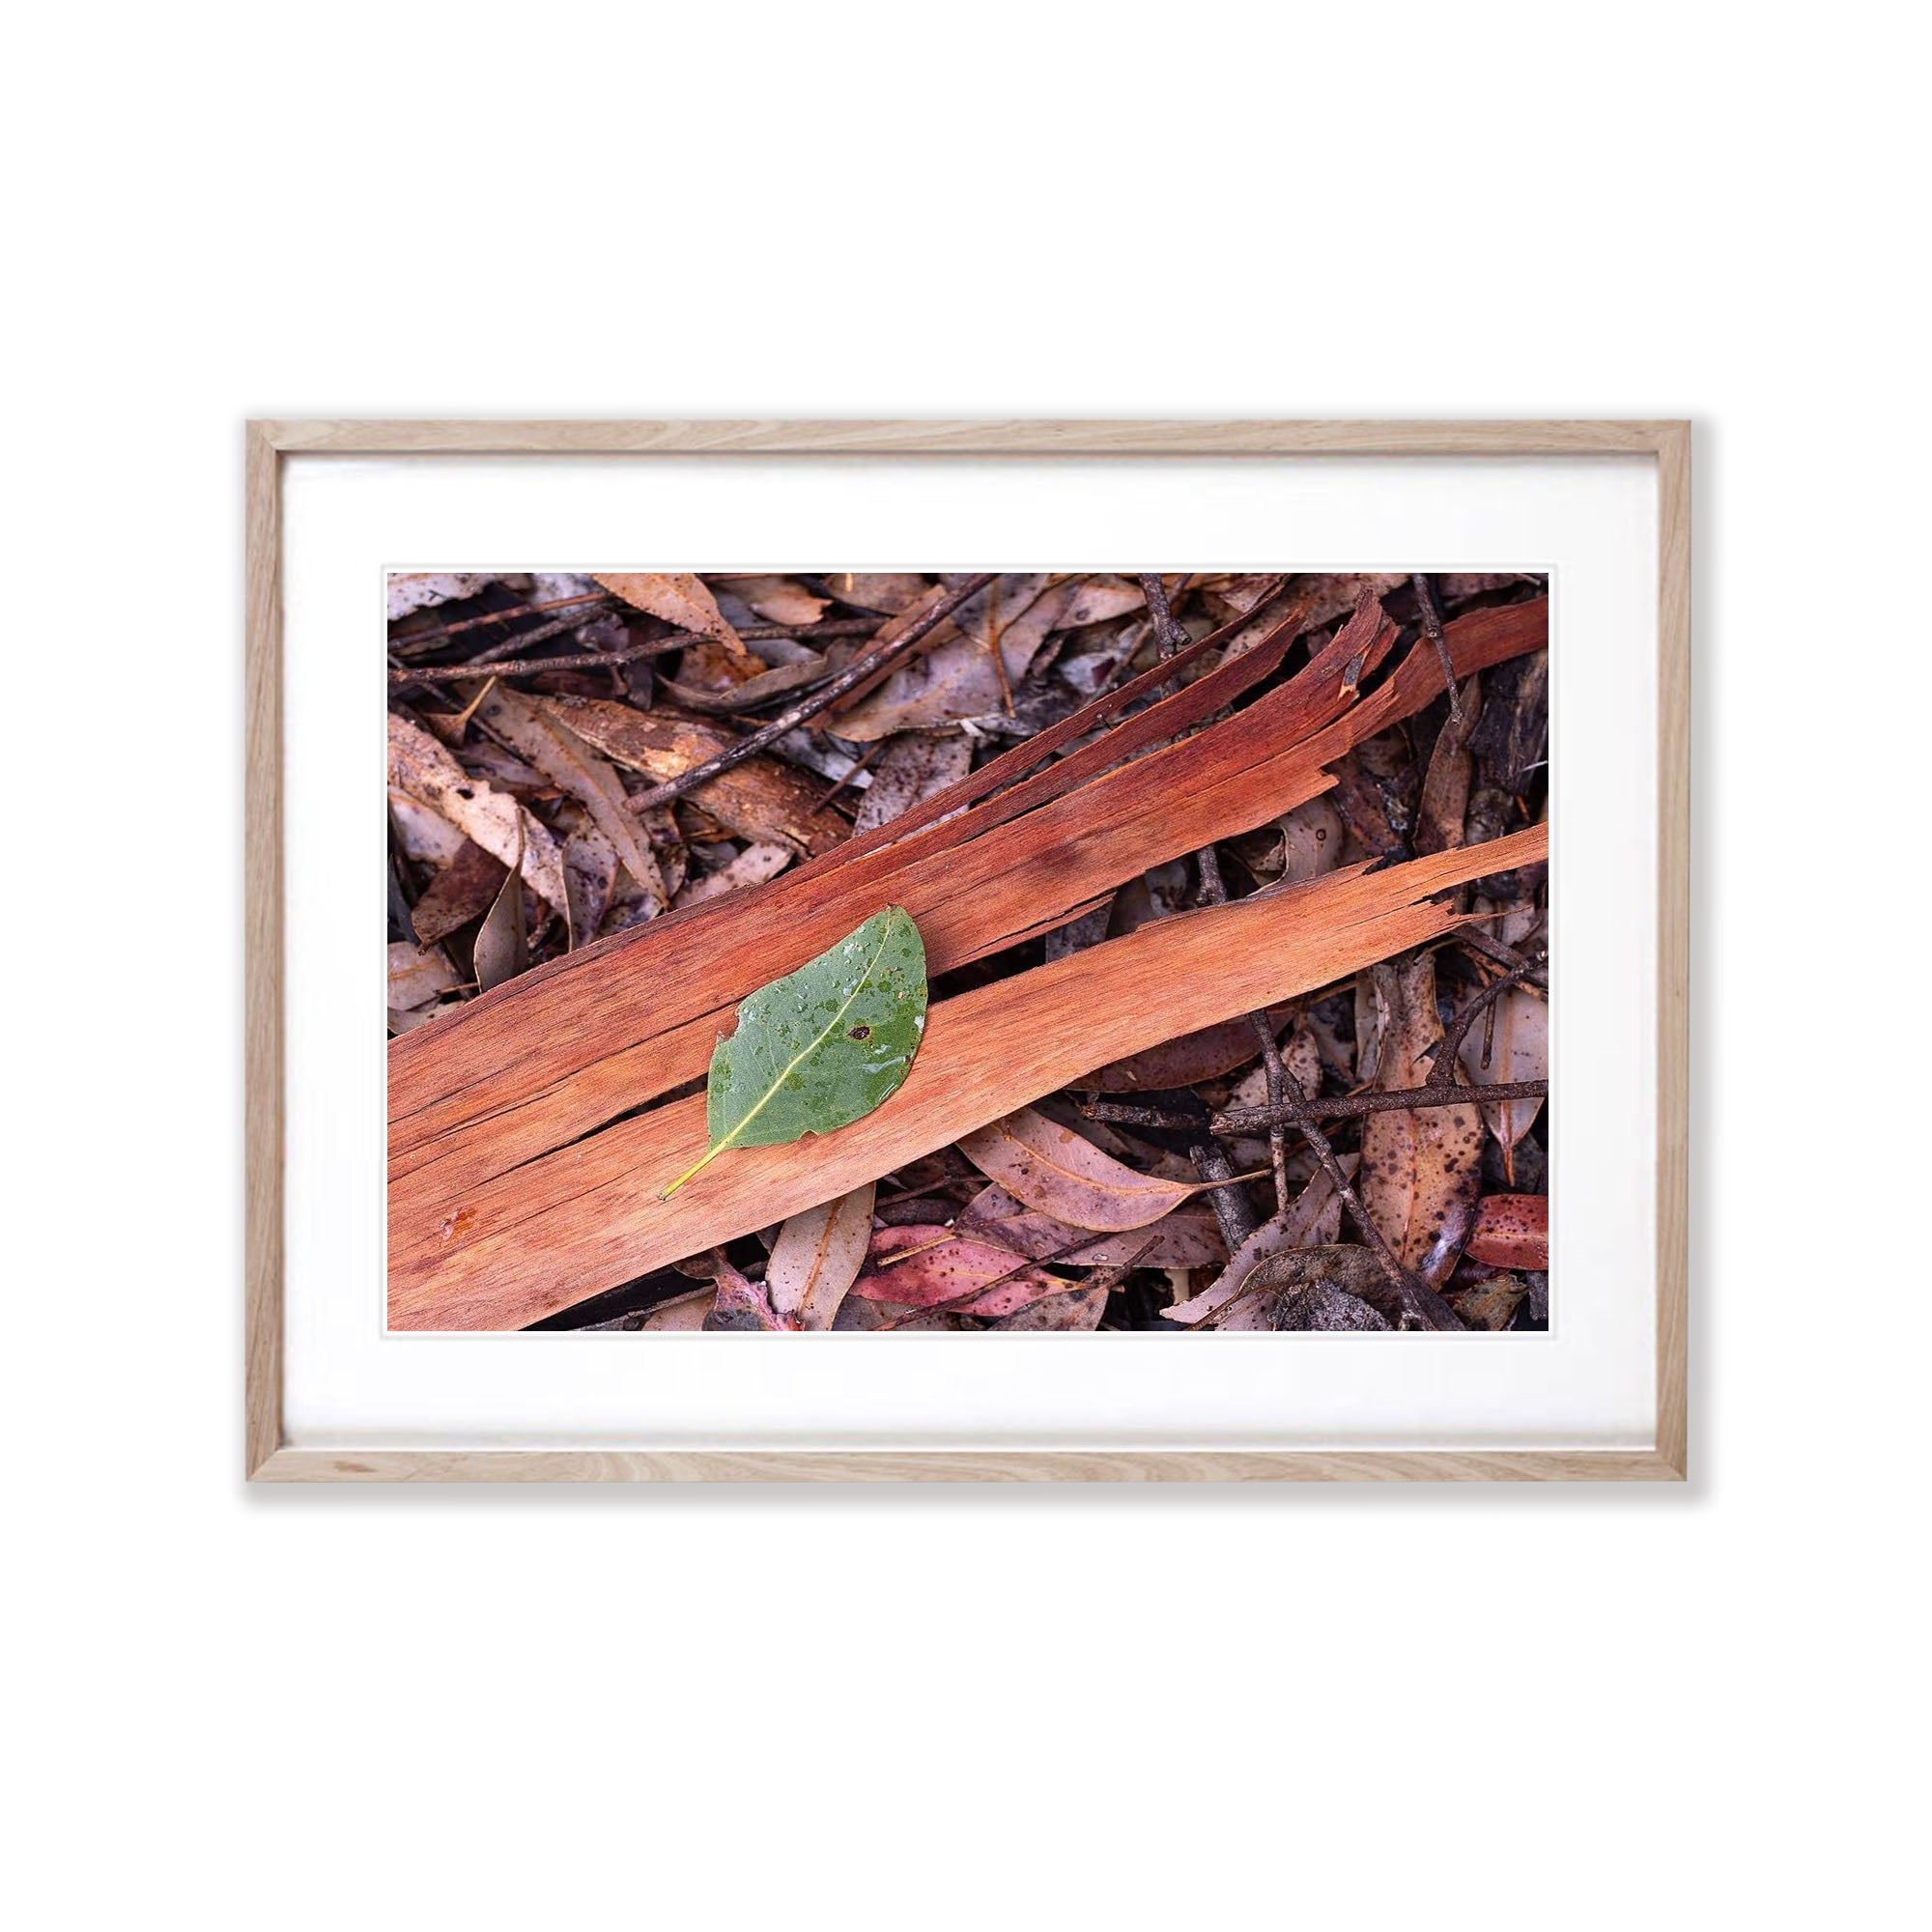 Leaf Litter, Kangaroo Island, South Australia